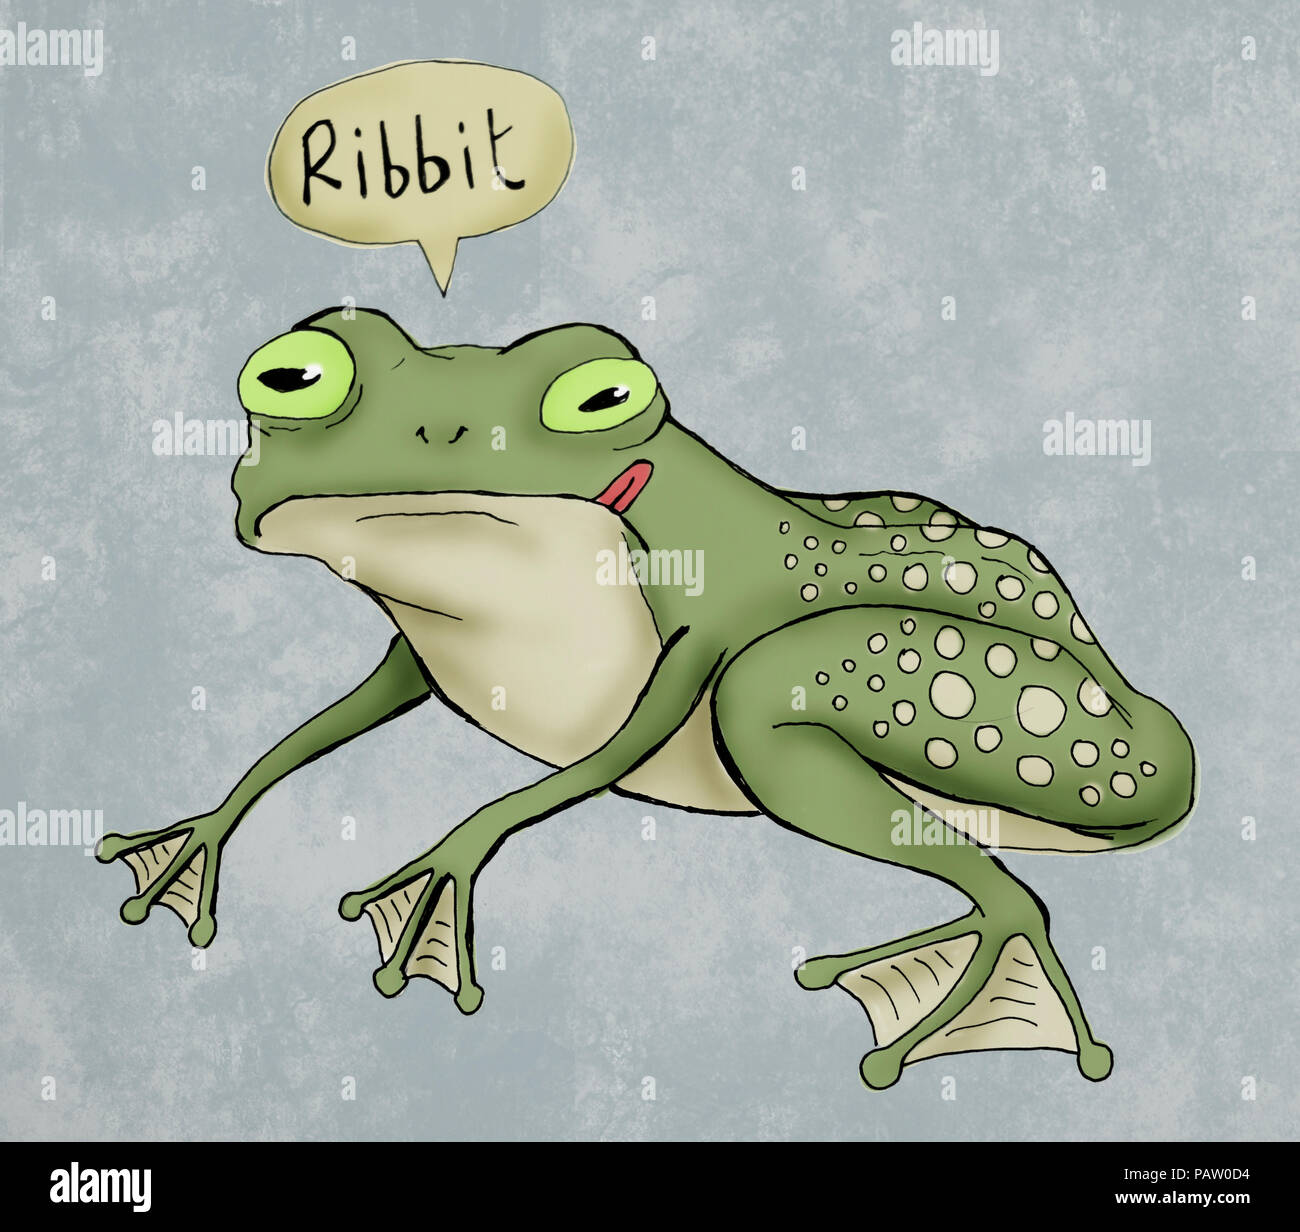 frog saying ribbit Stock Photo - Alamy